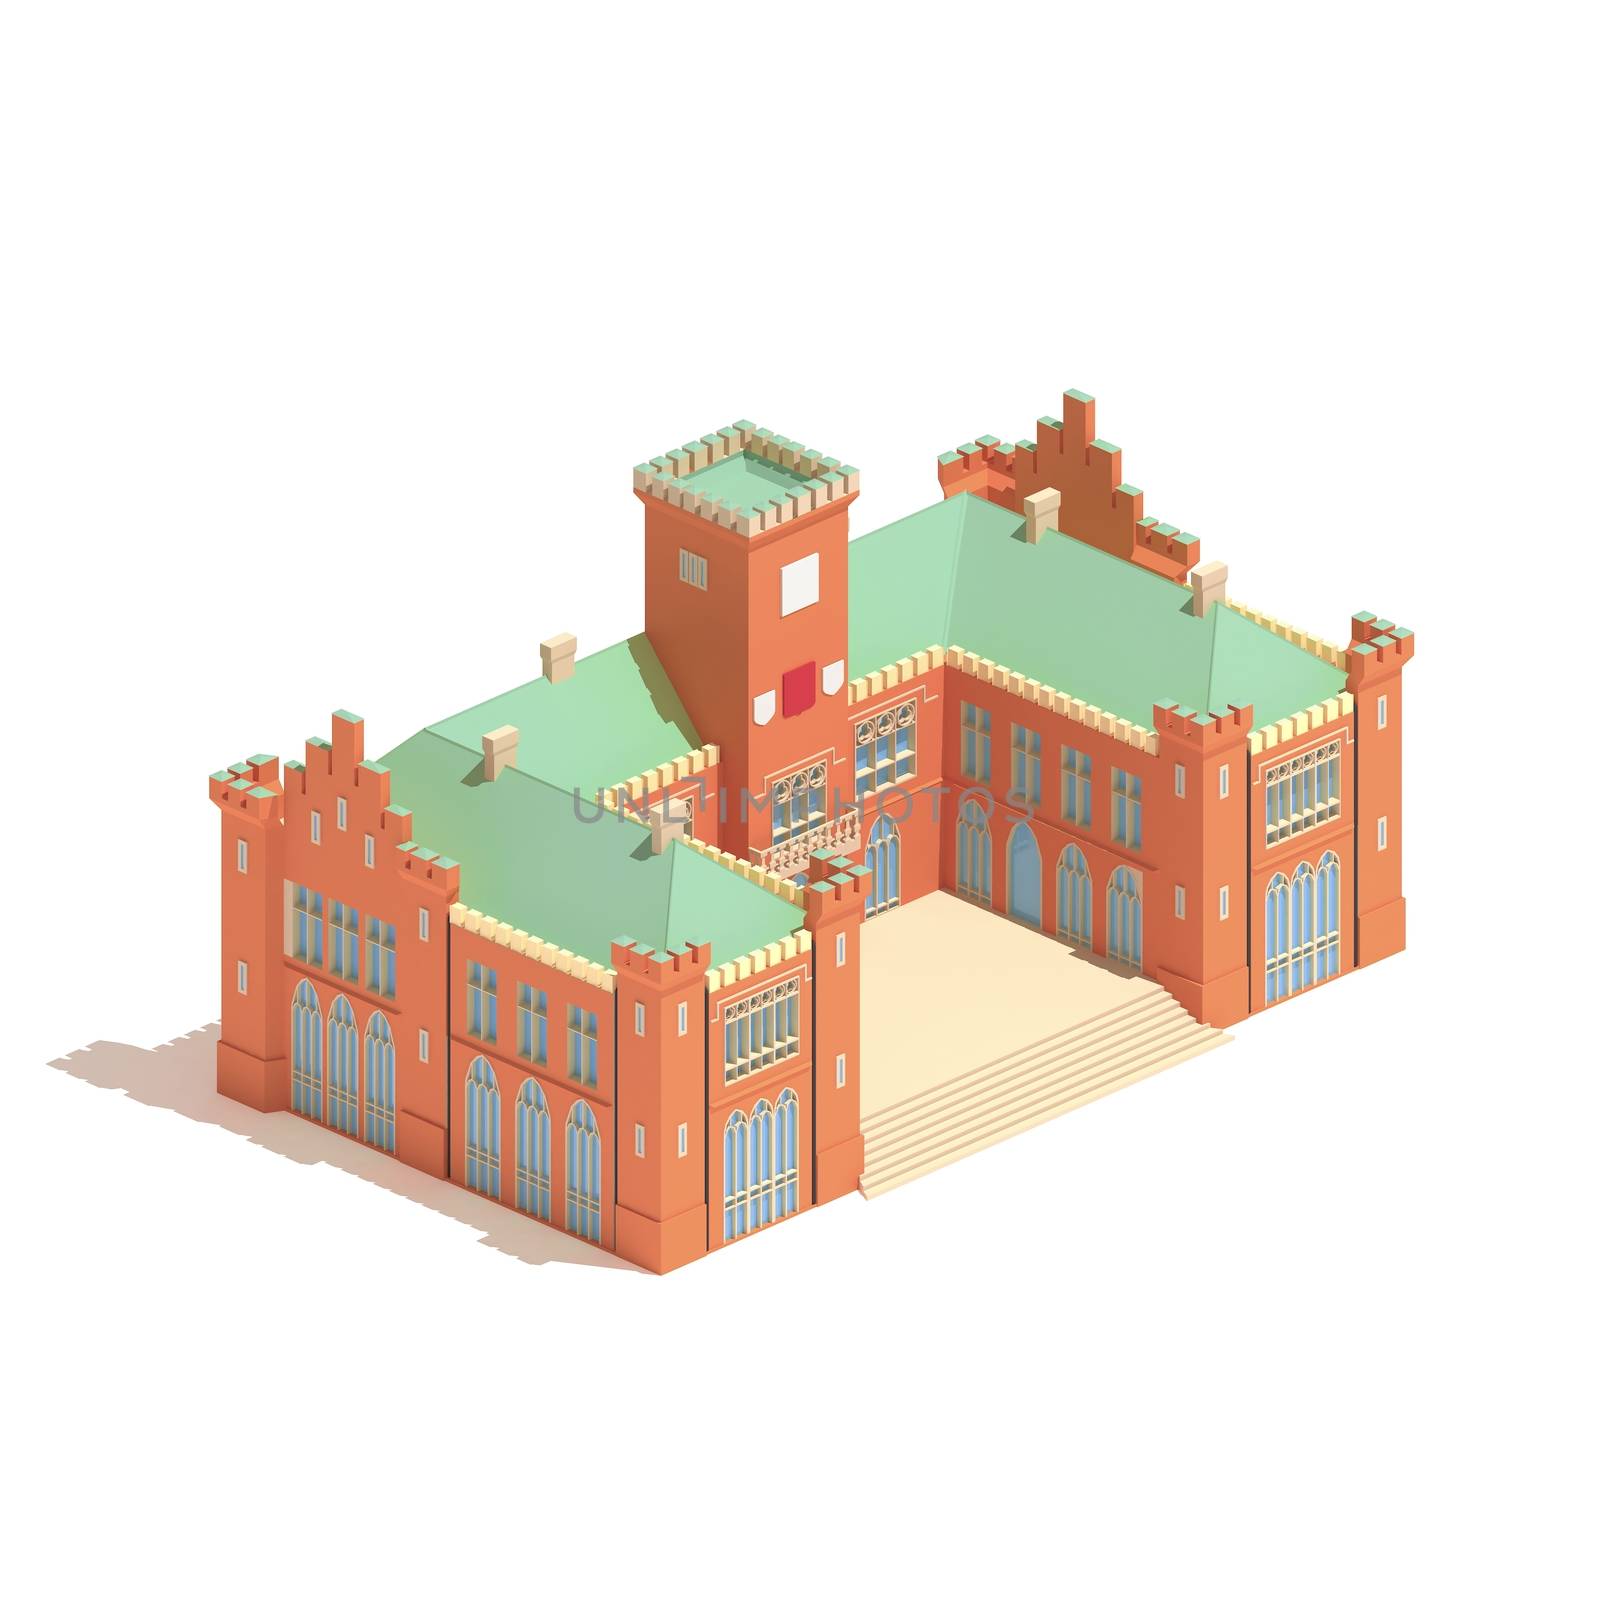 Flat 3d model isometric castle or university building  illustration isolated on white background.